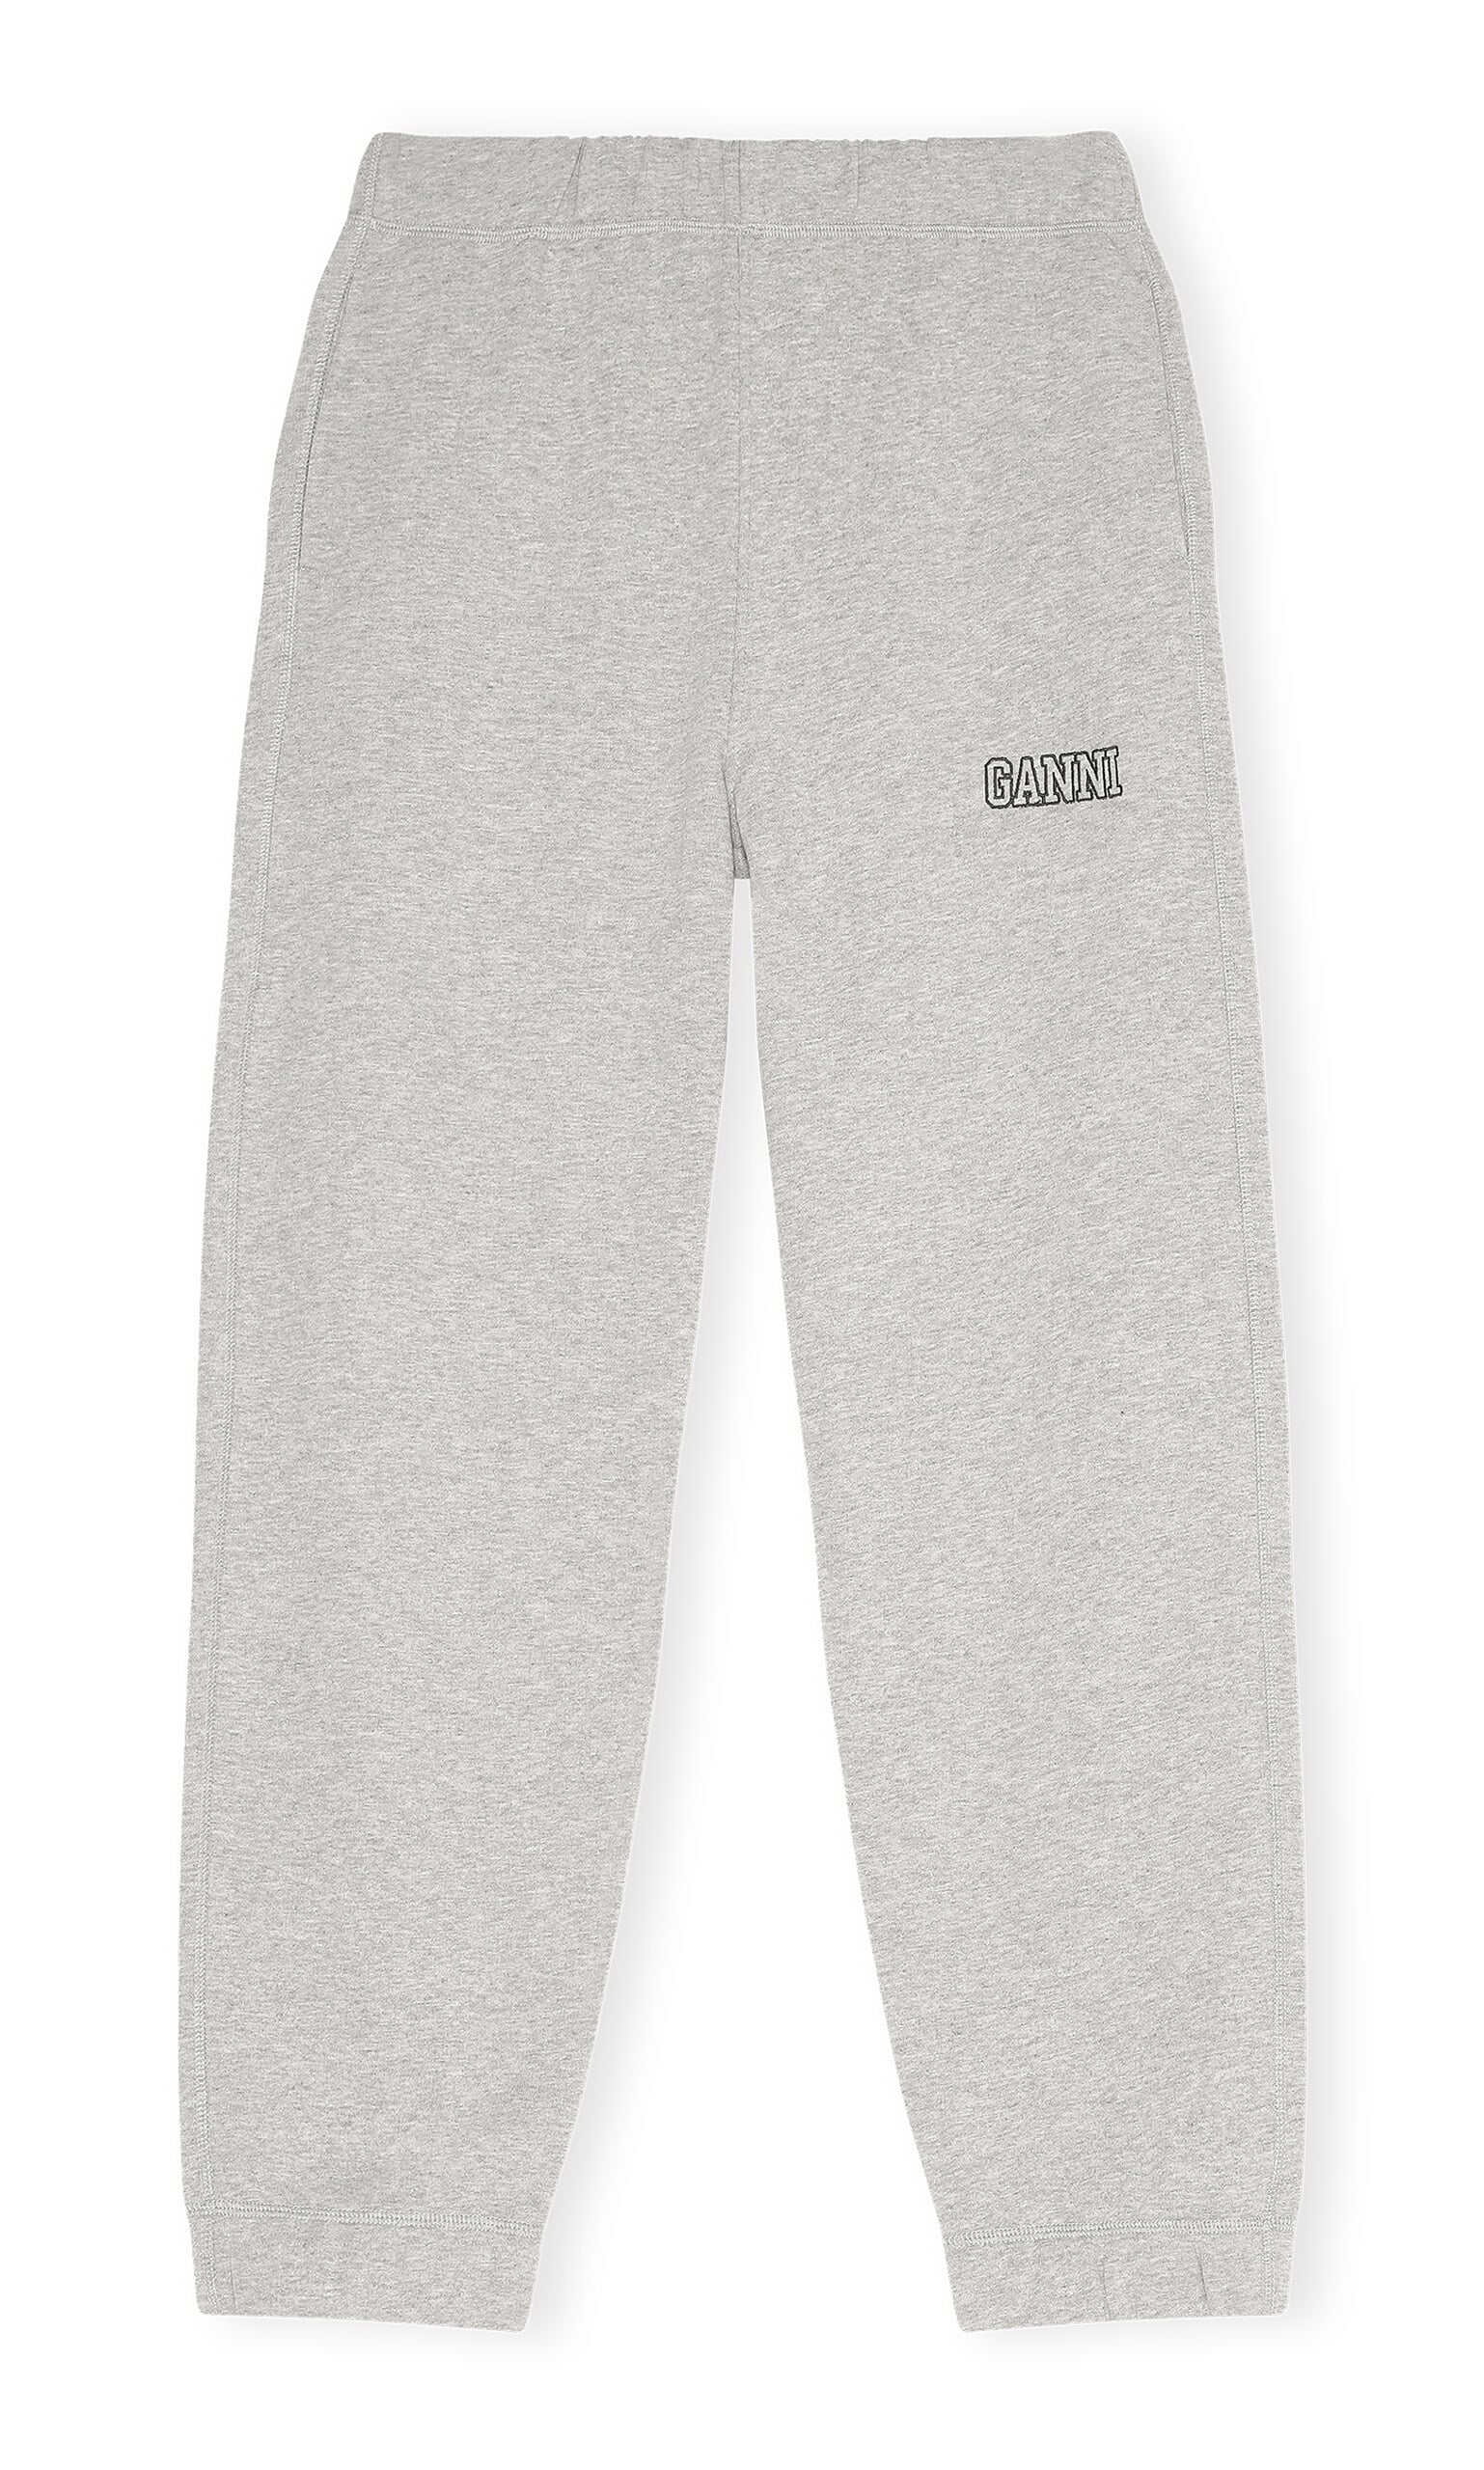 Grey Ganni sweatpants - Plümo Ltd